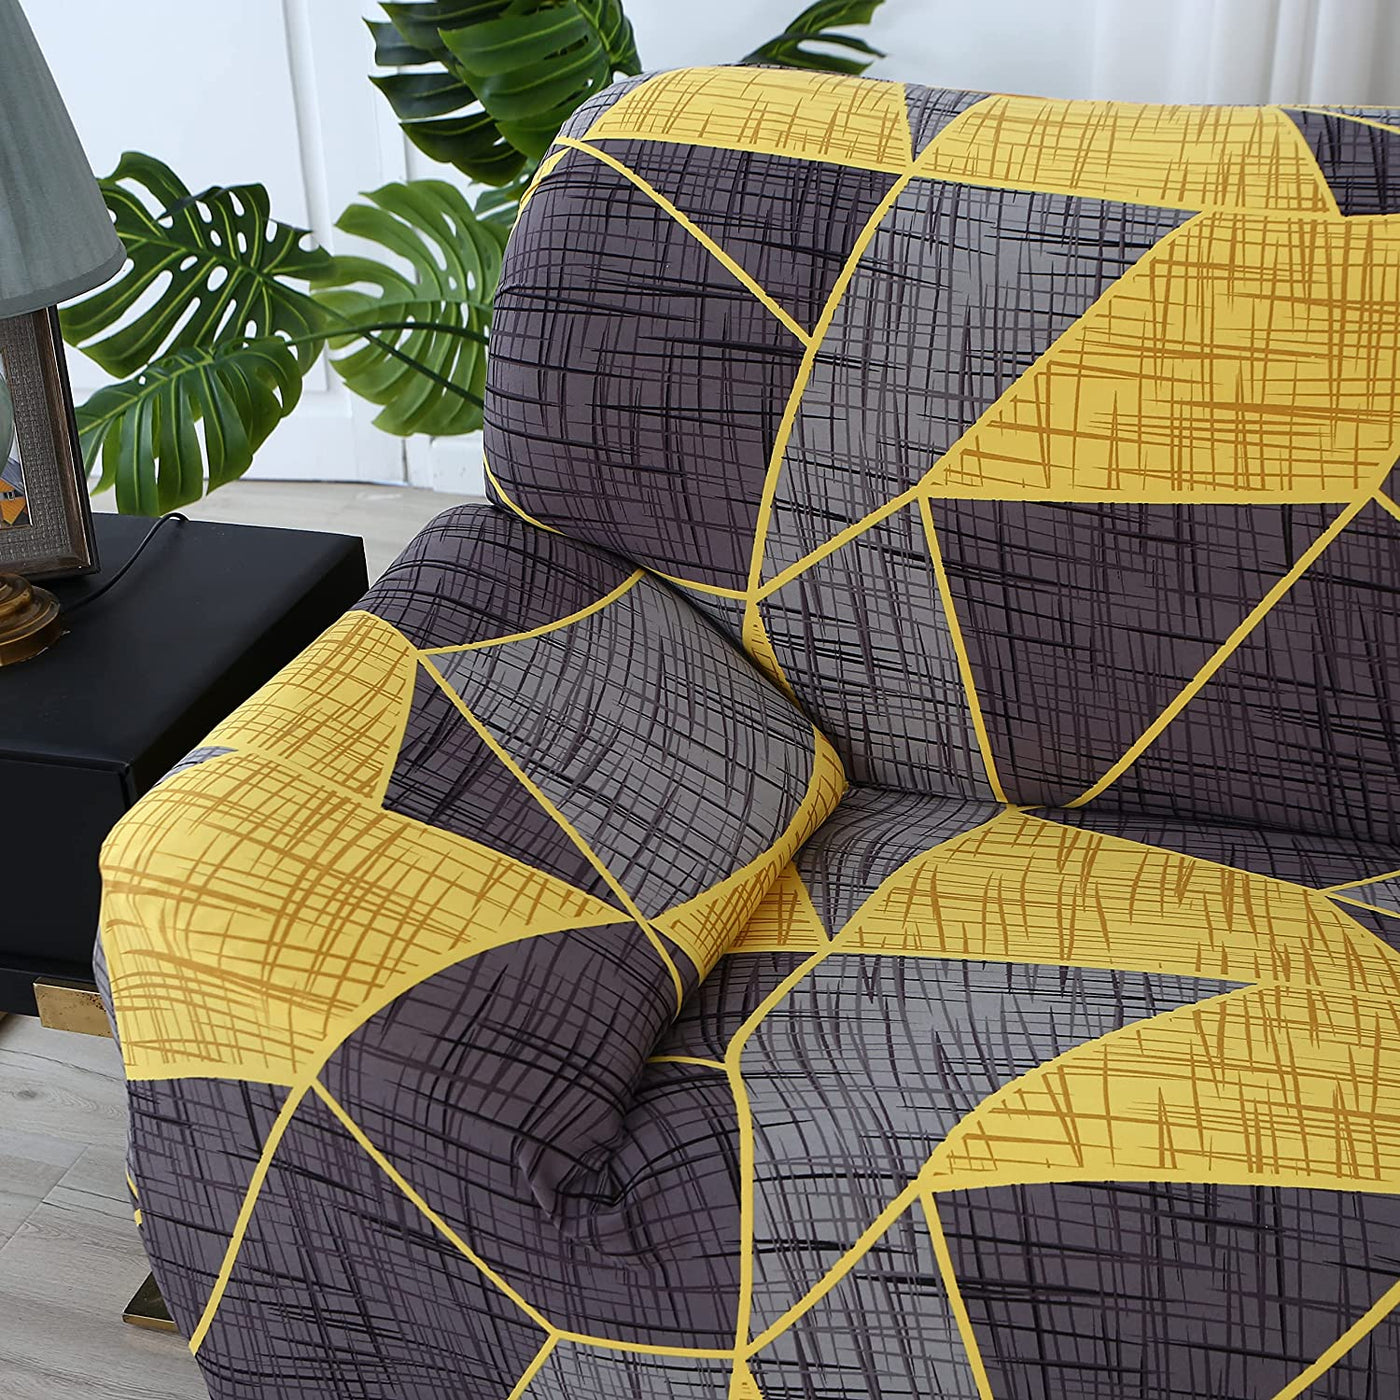 Universal Elastic Sofa Cover (Grey Yellow Prism)